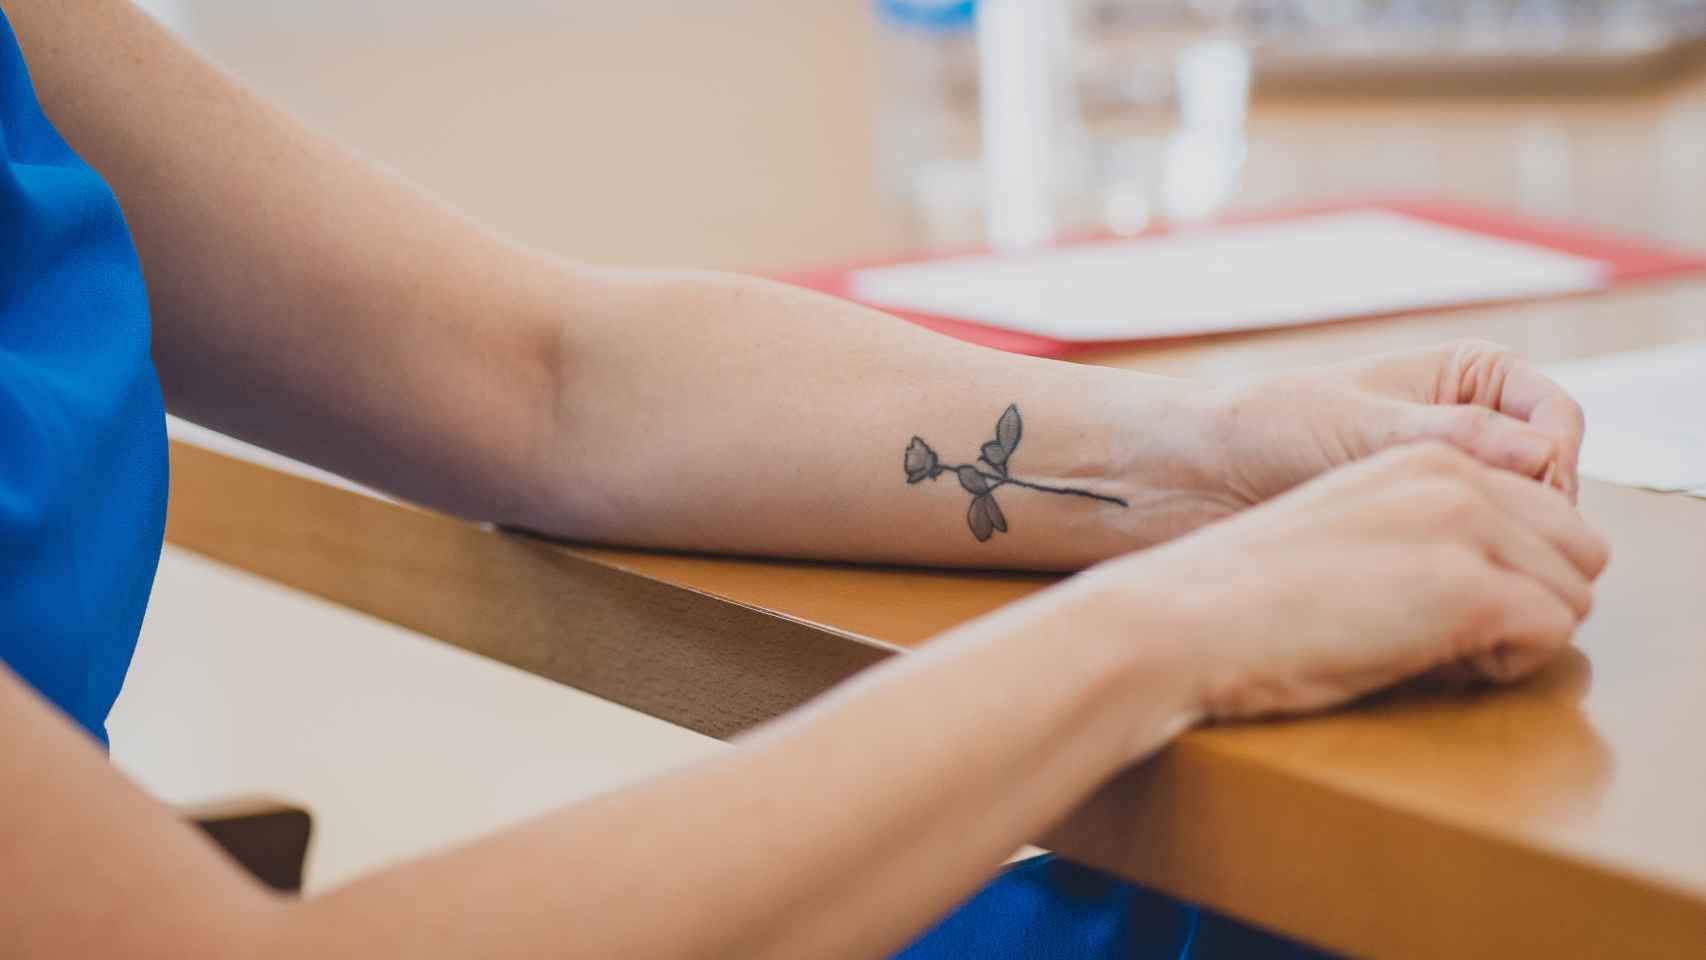 La presidenta de la Comunidad de Madrid luce un tatuaje en homenaje al grupo de Depeche Mode.